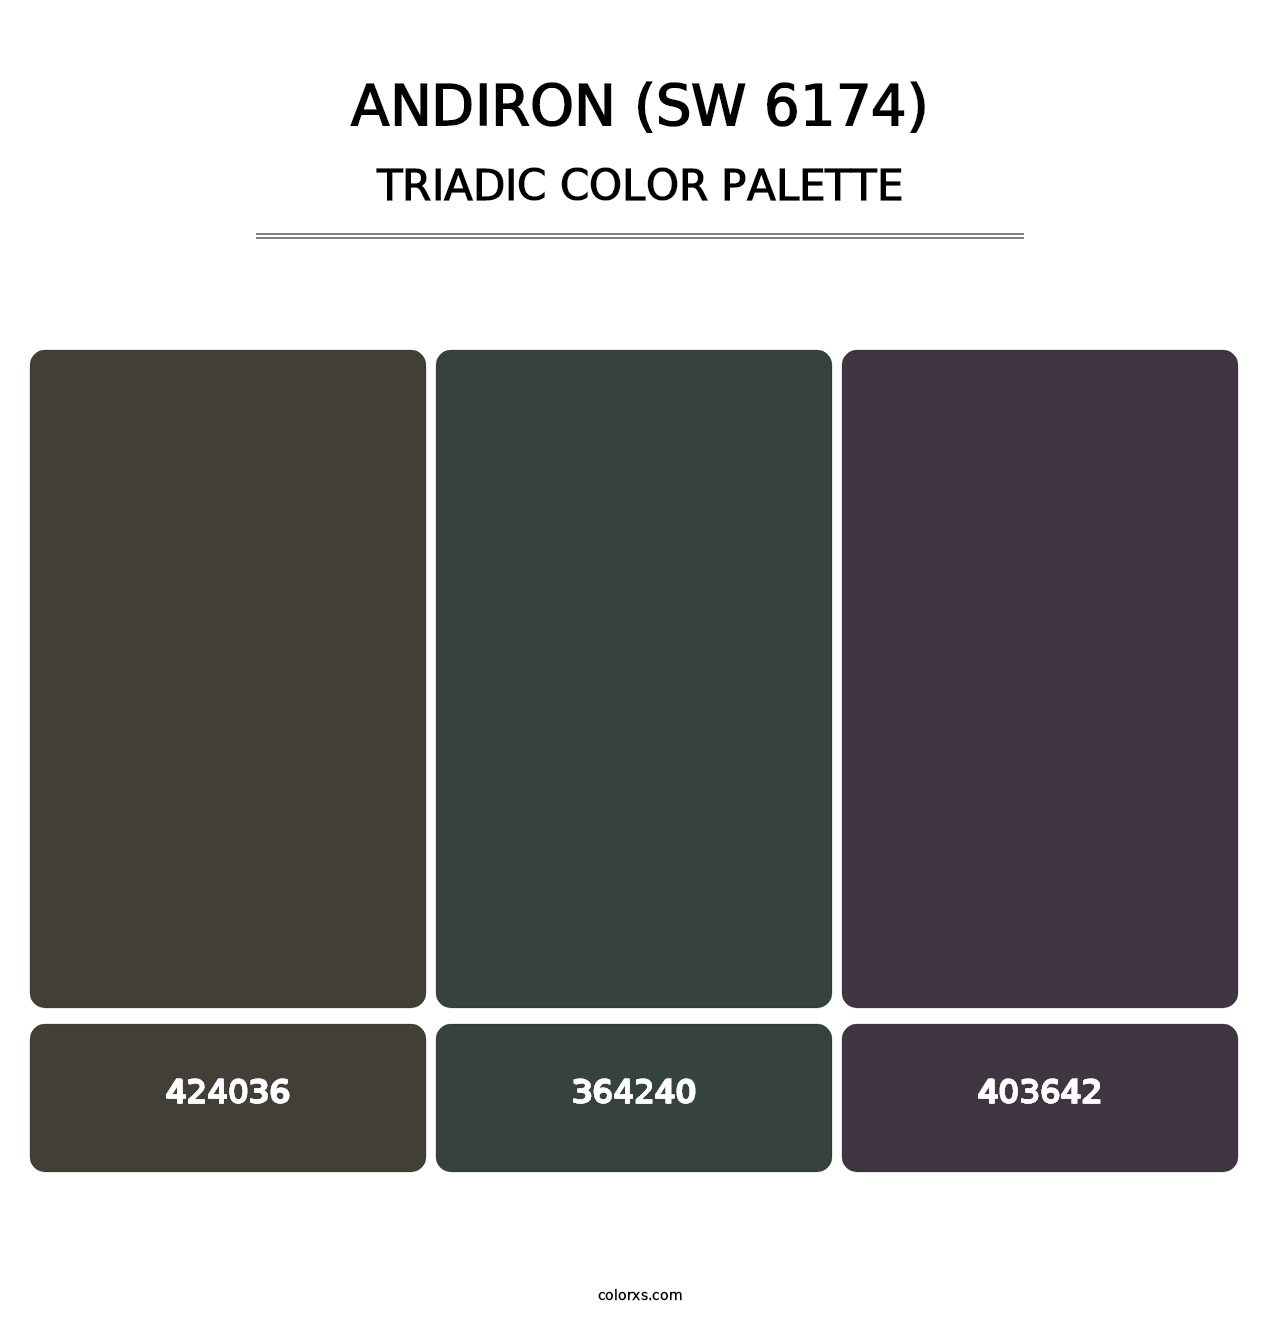 Andiron (SW 6174) - Triadic Color Palette